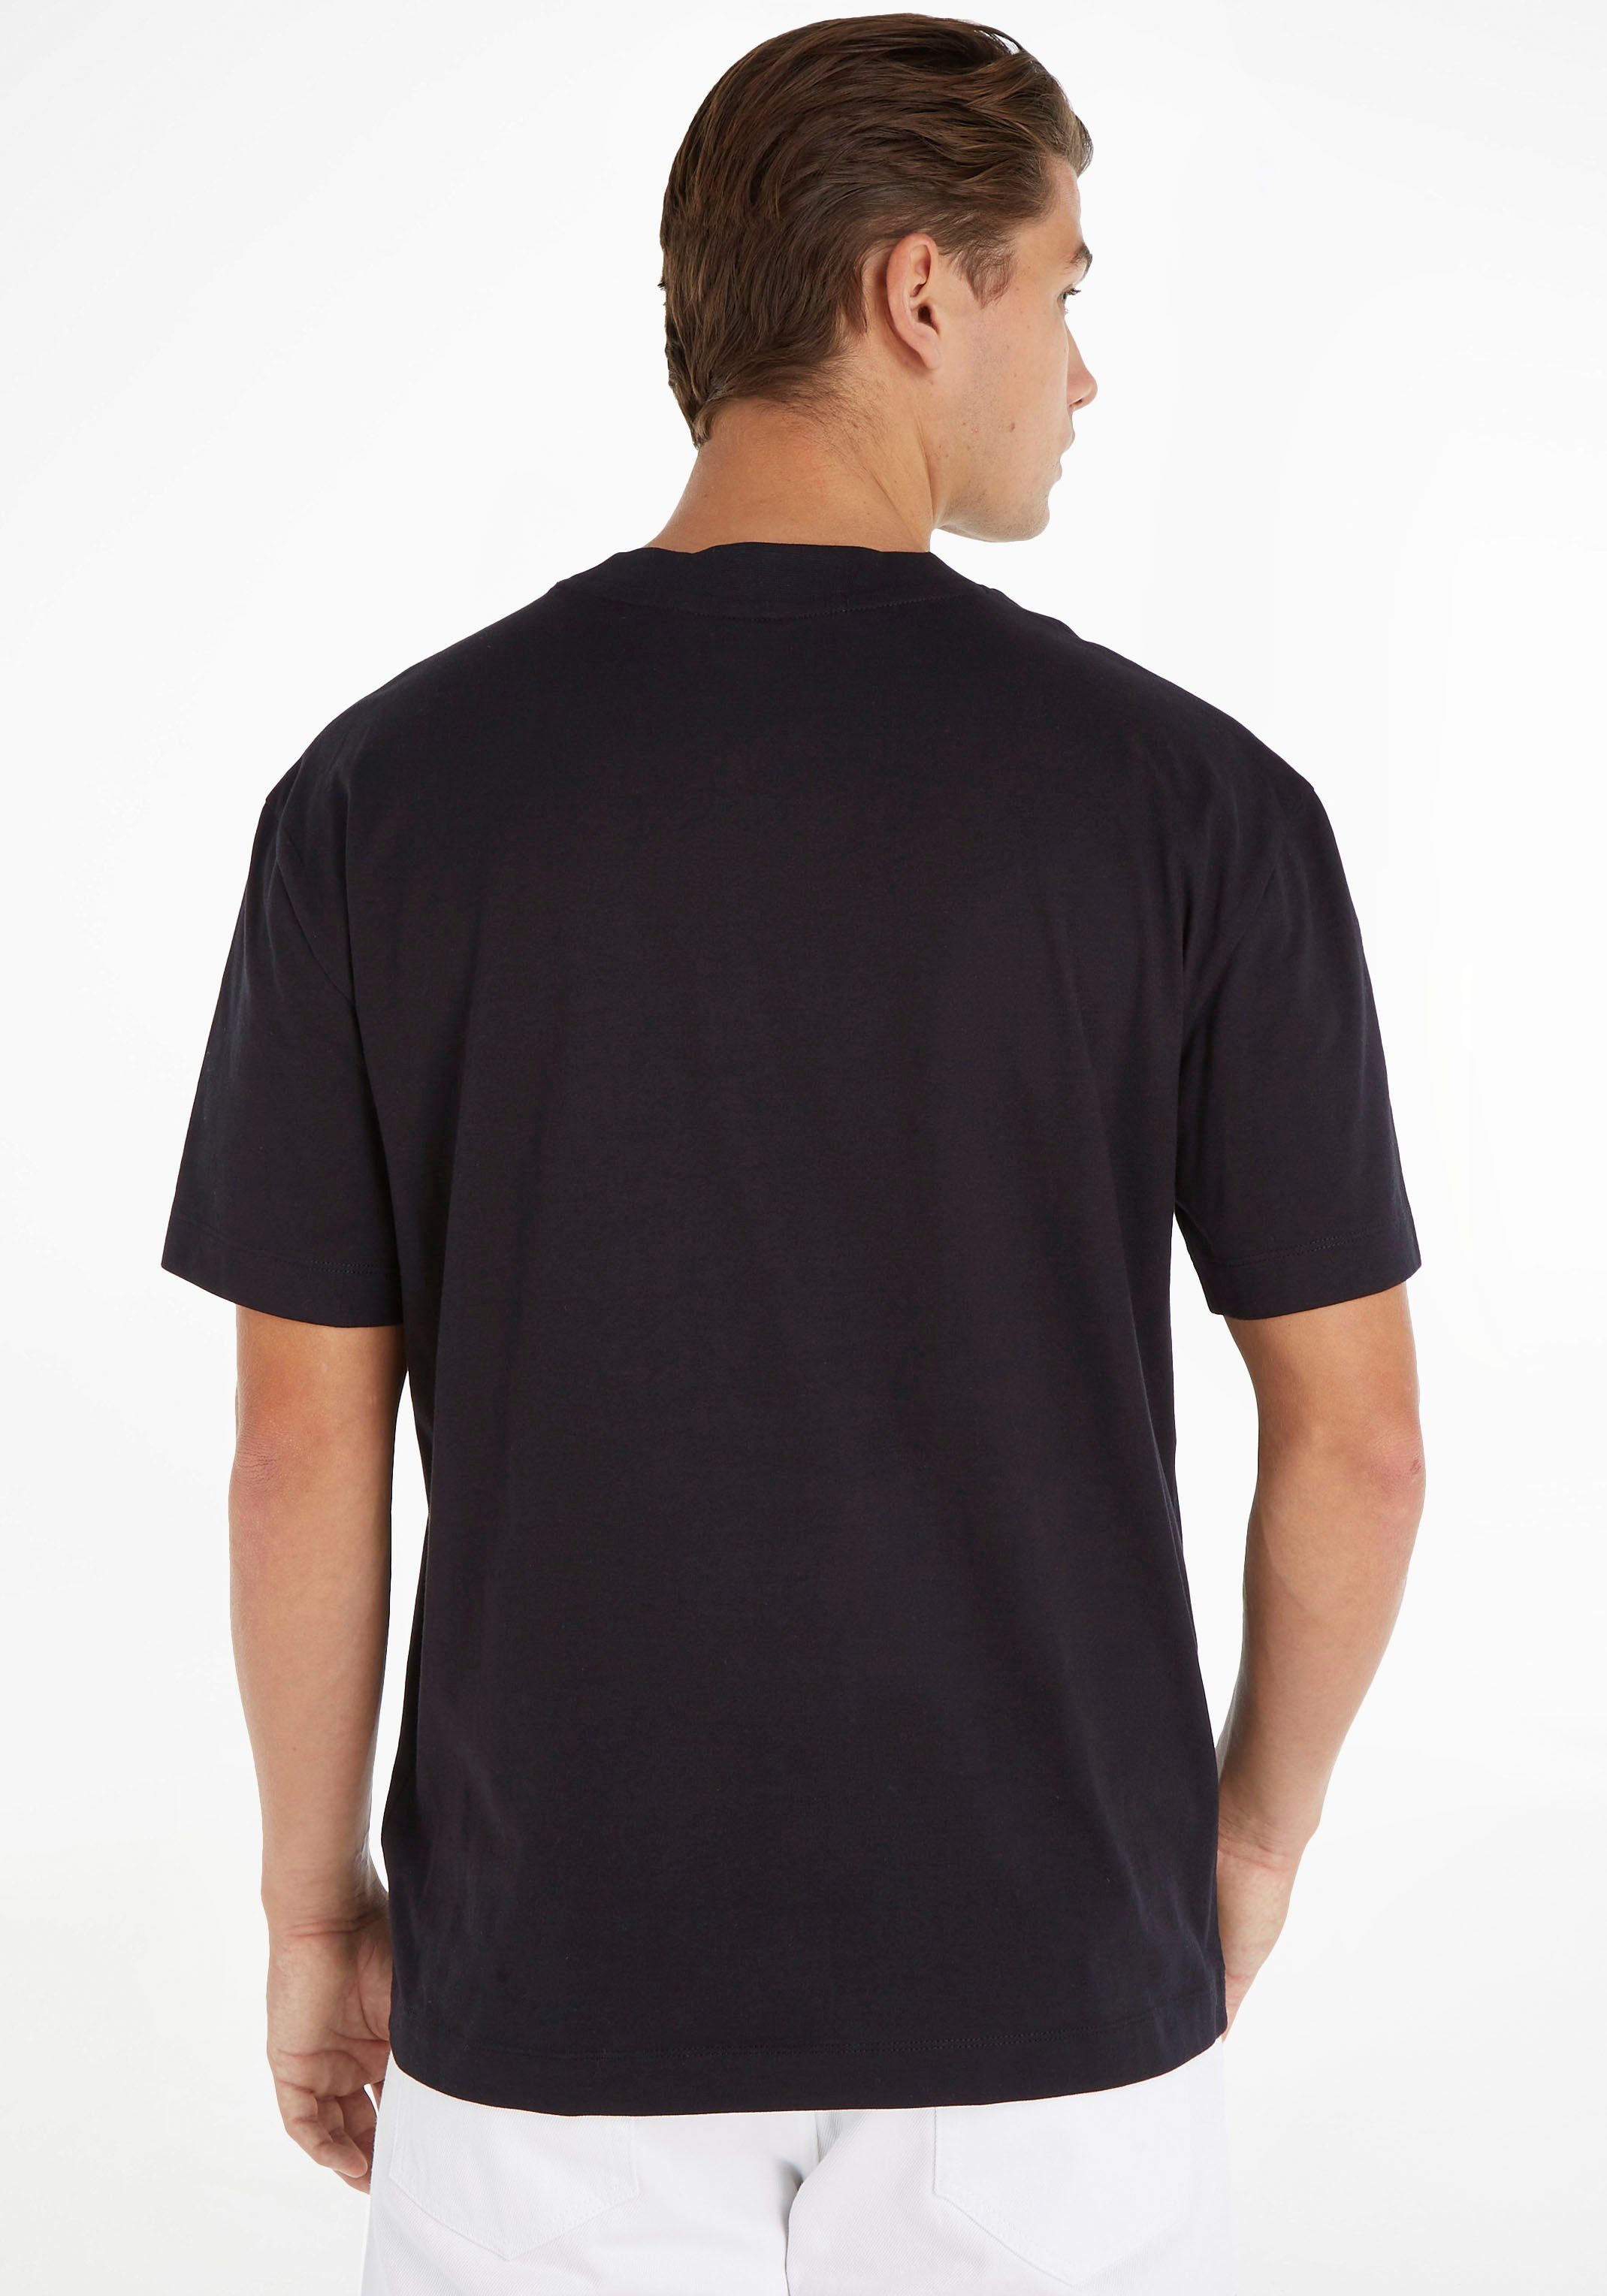 TEE T-Shirt BLOCKING Jeans Klein Calvin